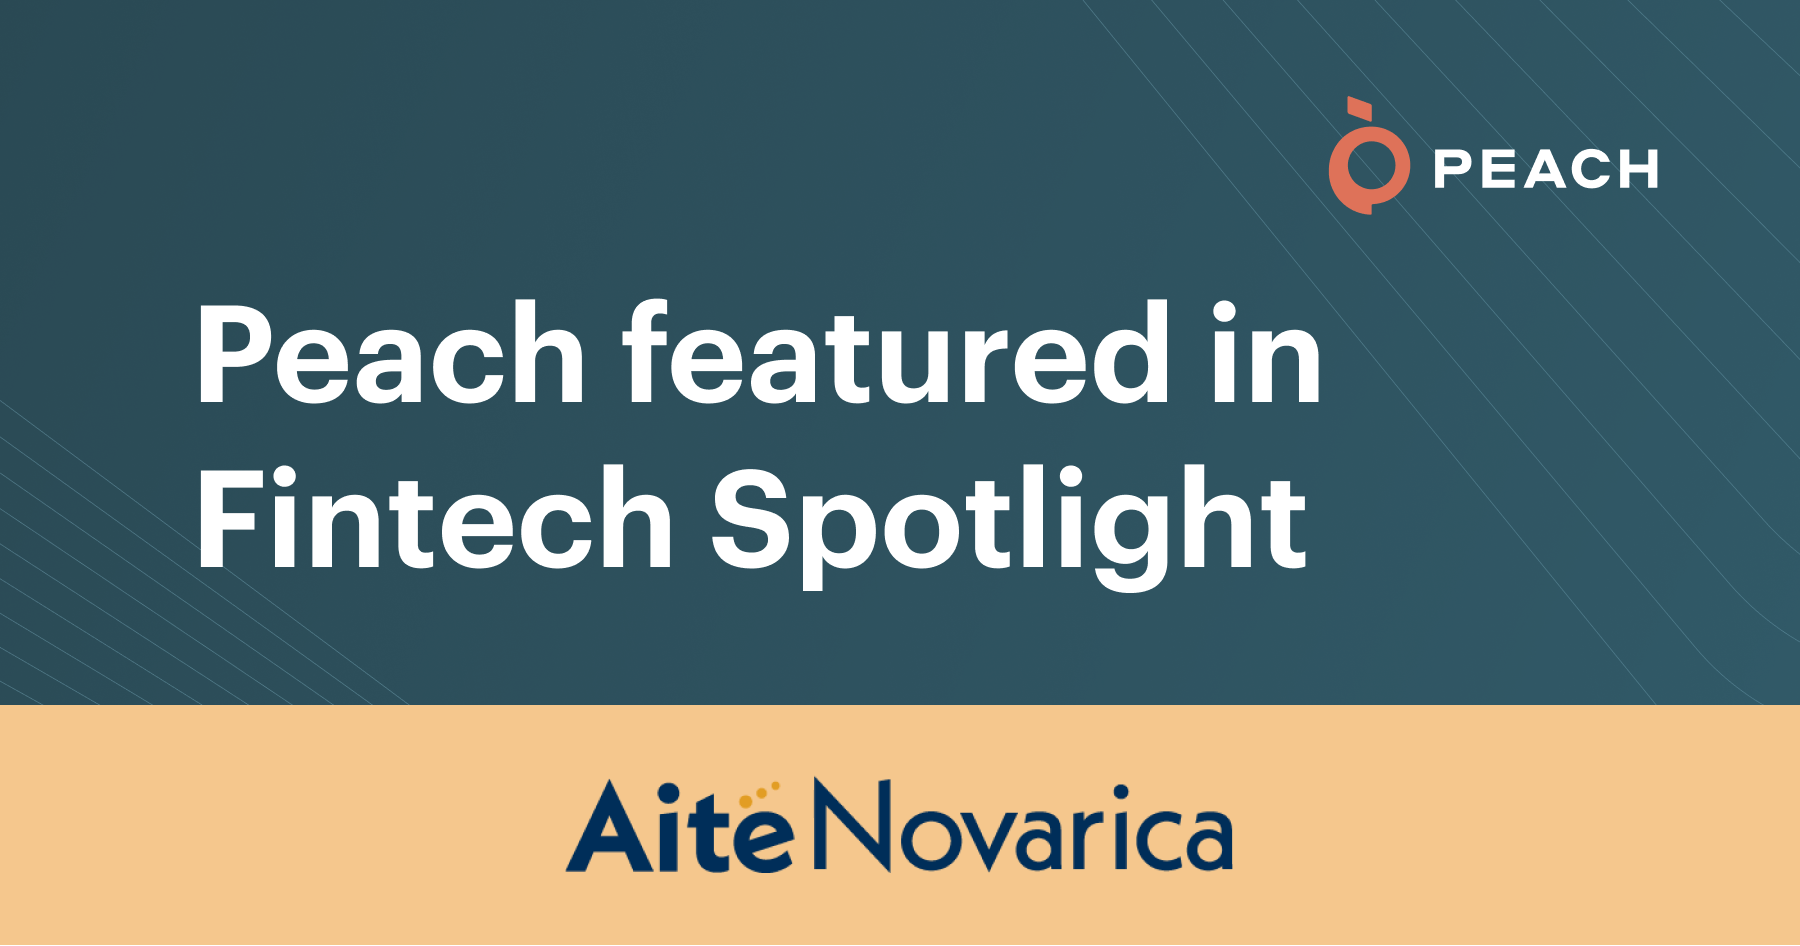 Peach featured in Aite-Novarica's Fintech Spotlight